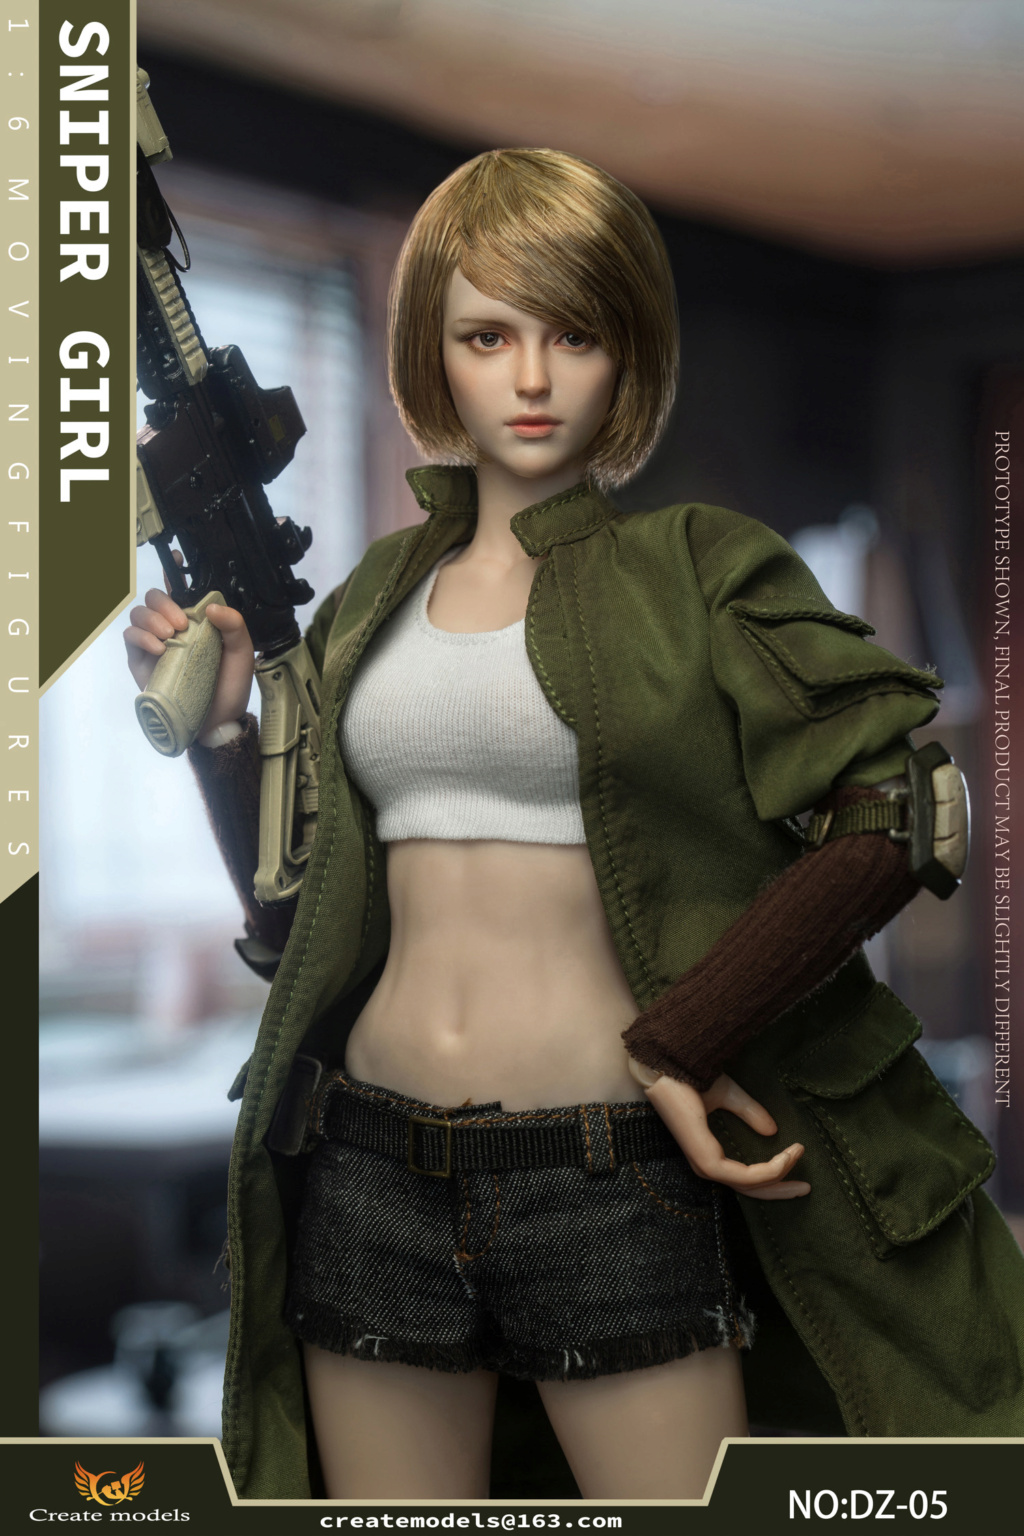 ModernMilitary - NEW PRODUCT: Createmodels: 1/6 Sniper Girl-Songbird/Lan Action Figures #DZ-05/DZ-06 18512110